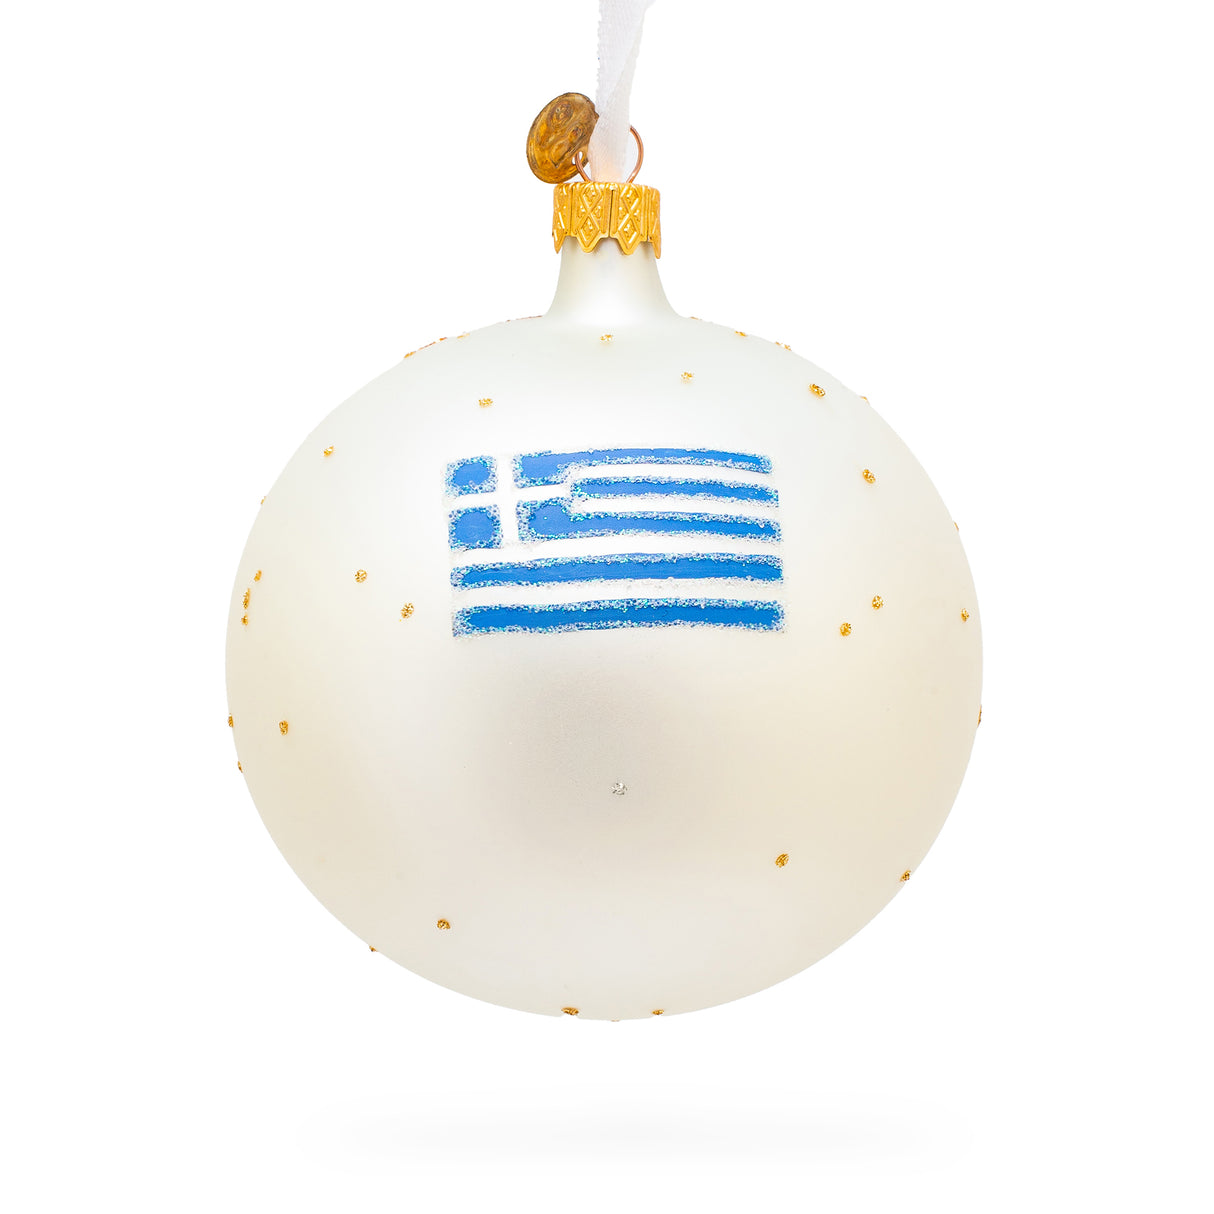 Buy Christmas Ornaments > Travel > Europe > Greece > Wonders of the World by BestPysanky Online Gift Ship